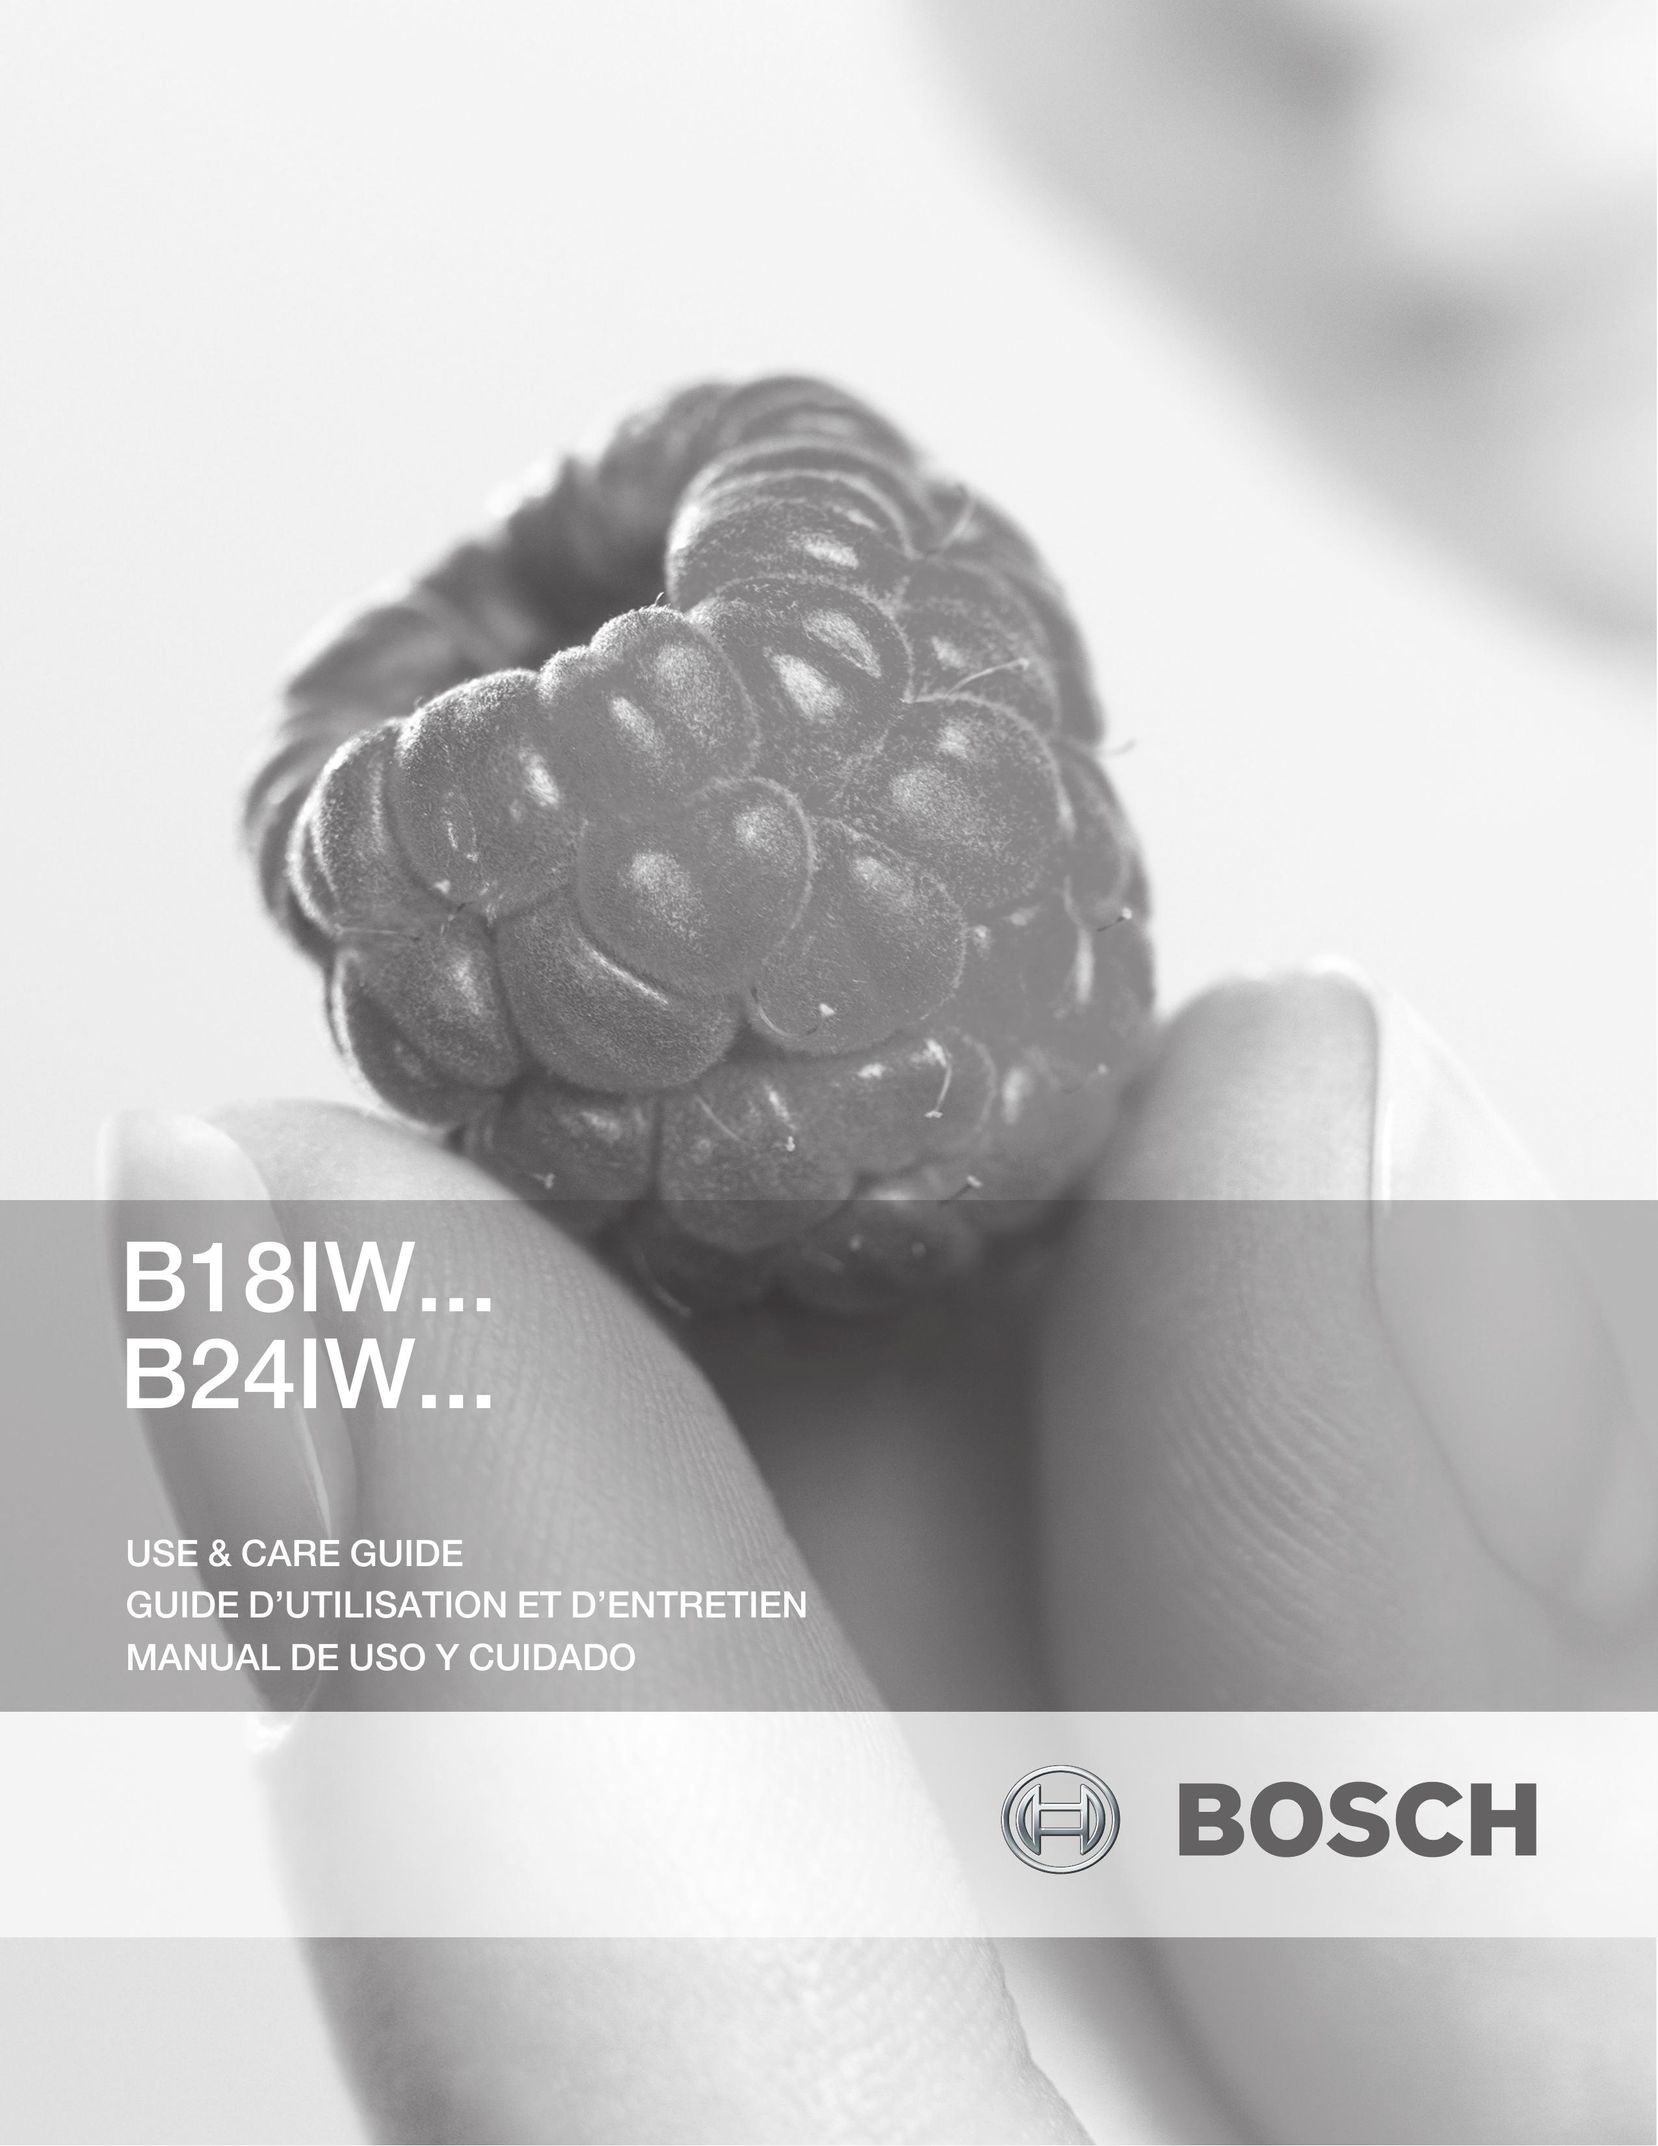 Bosch Appliances B24IW Beverage Dispenser User Manual (Page 1)